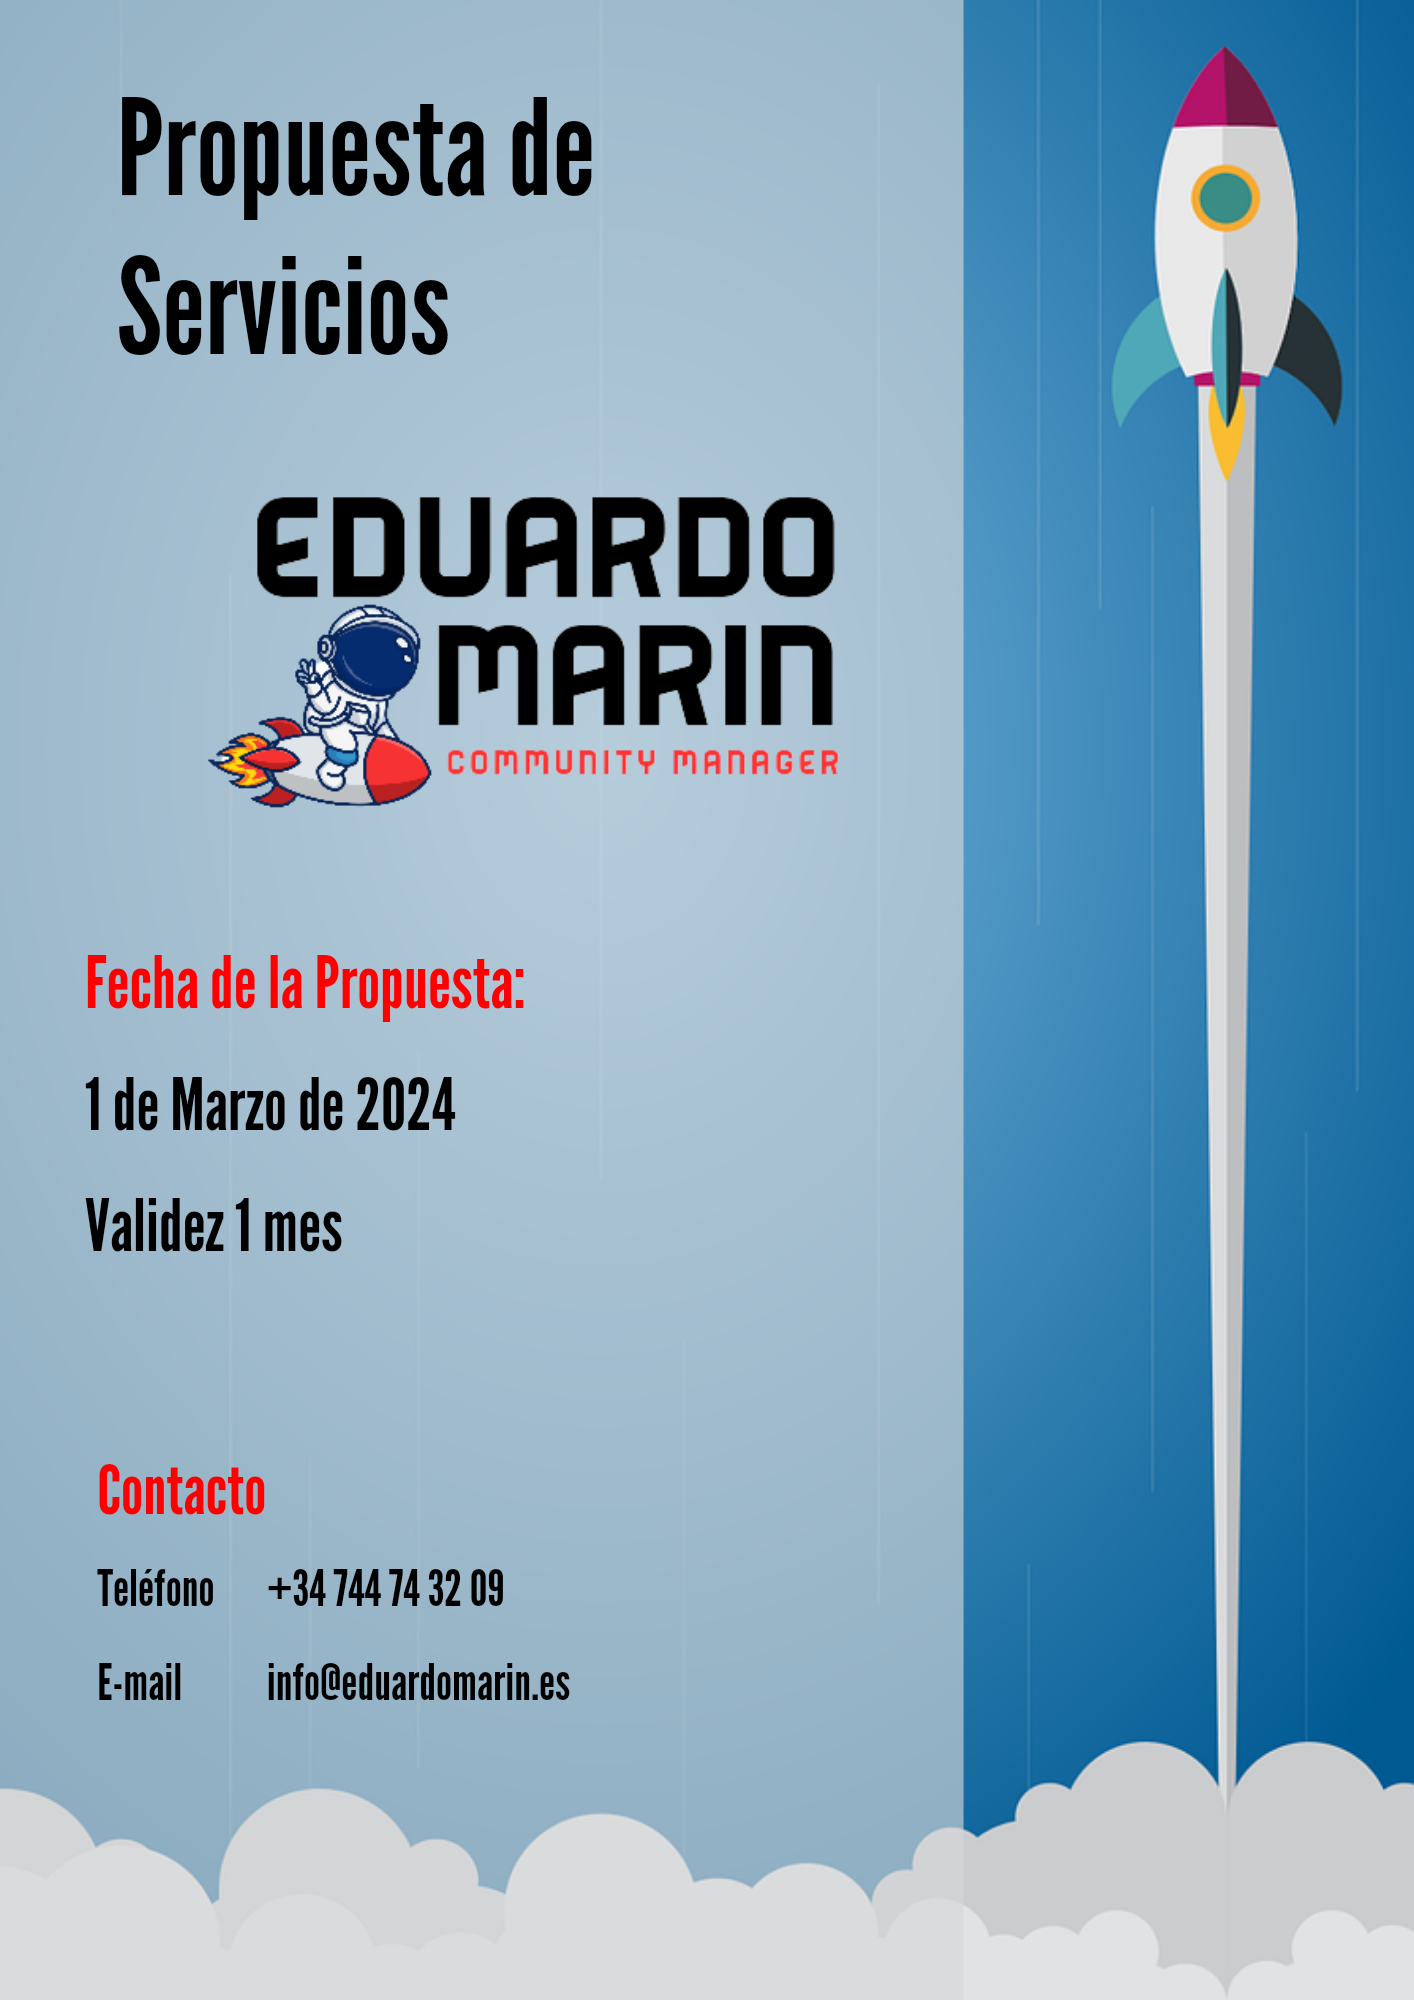 Propuesta de
Servicios

EDUARDO
MARIN

communiTY MANAGER

Fecha de la Propuesta:
1de Marzo de 2024
Validez 1 mes

Contacto
Teléfono +34744743209

E-mail info@eduardomarin.es